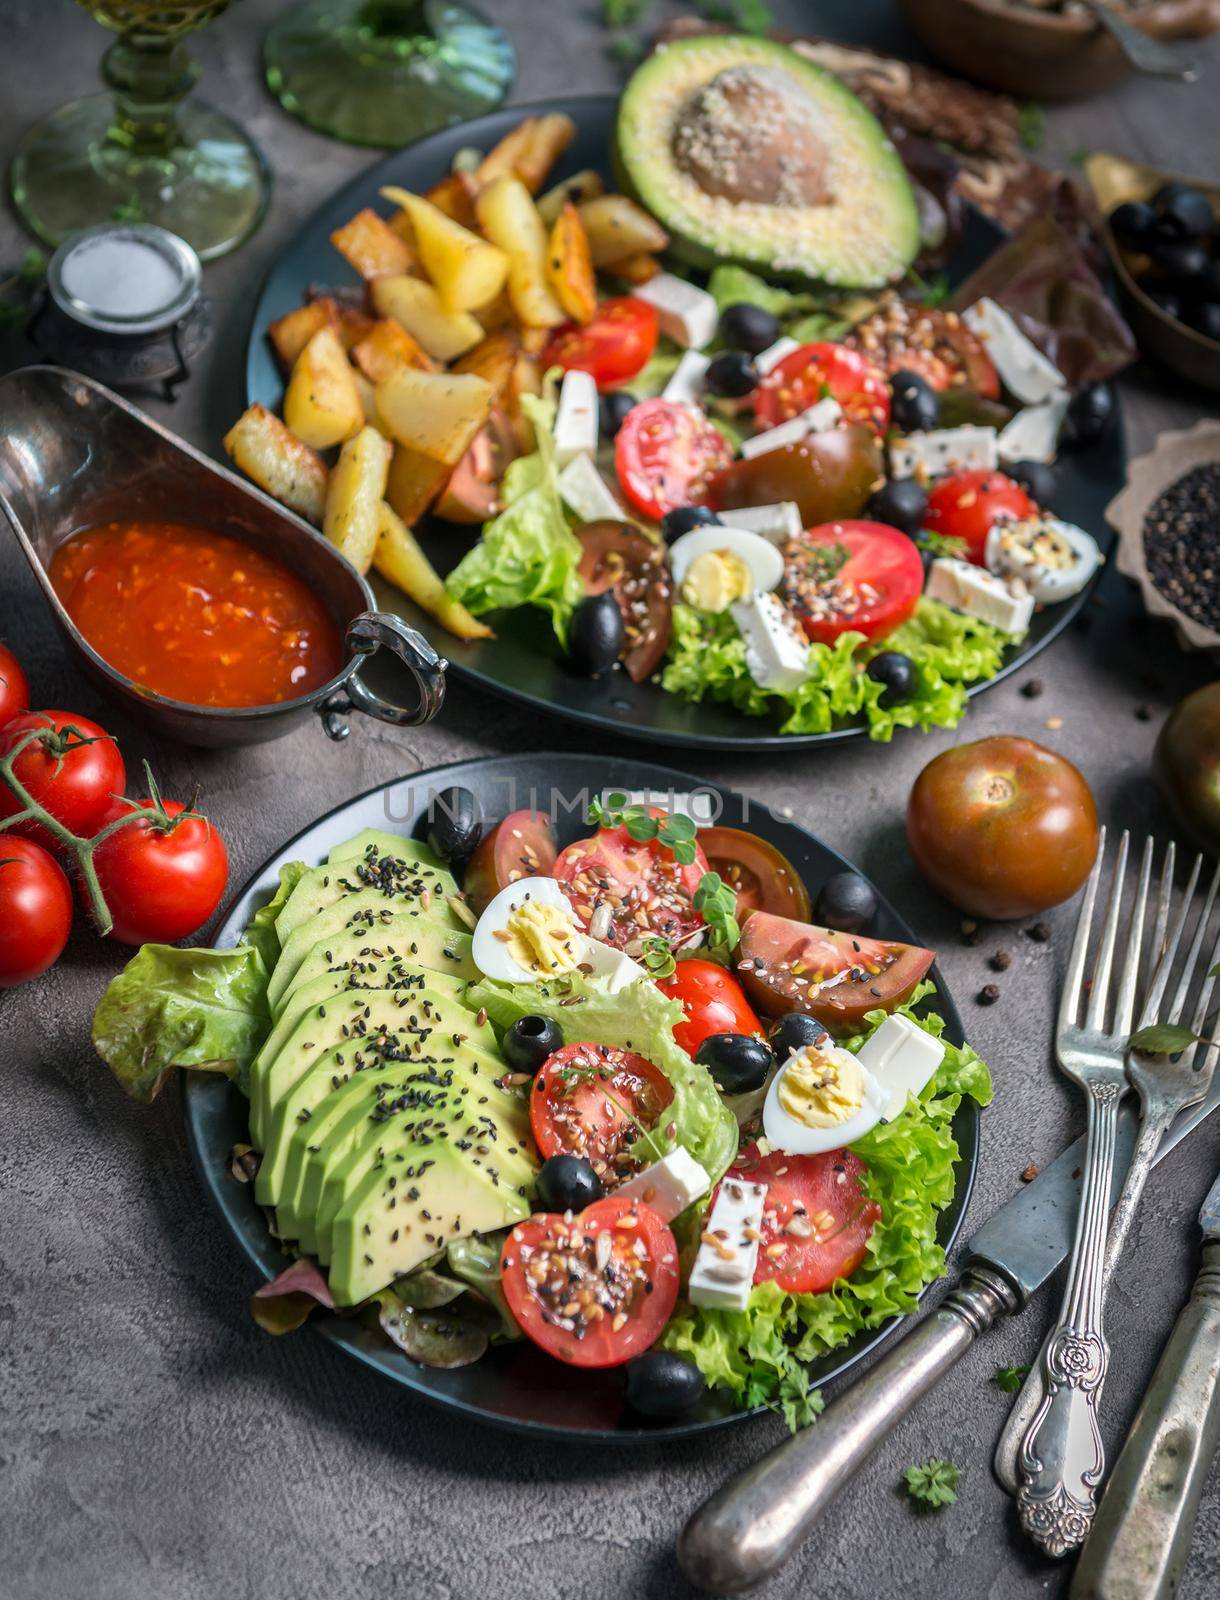 Vegetarian dinner - fried potatoes and fresh vegetable salad by tan4ikk1